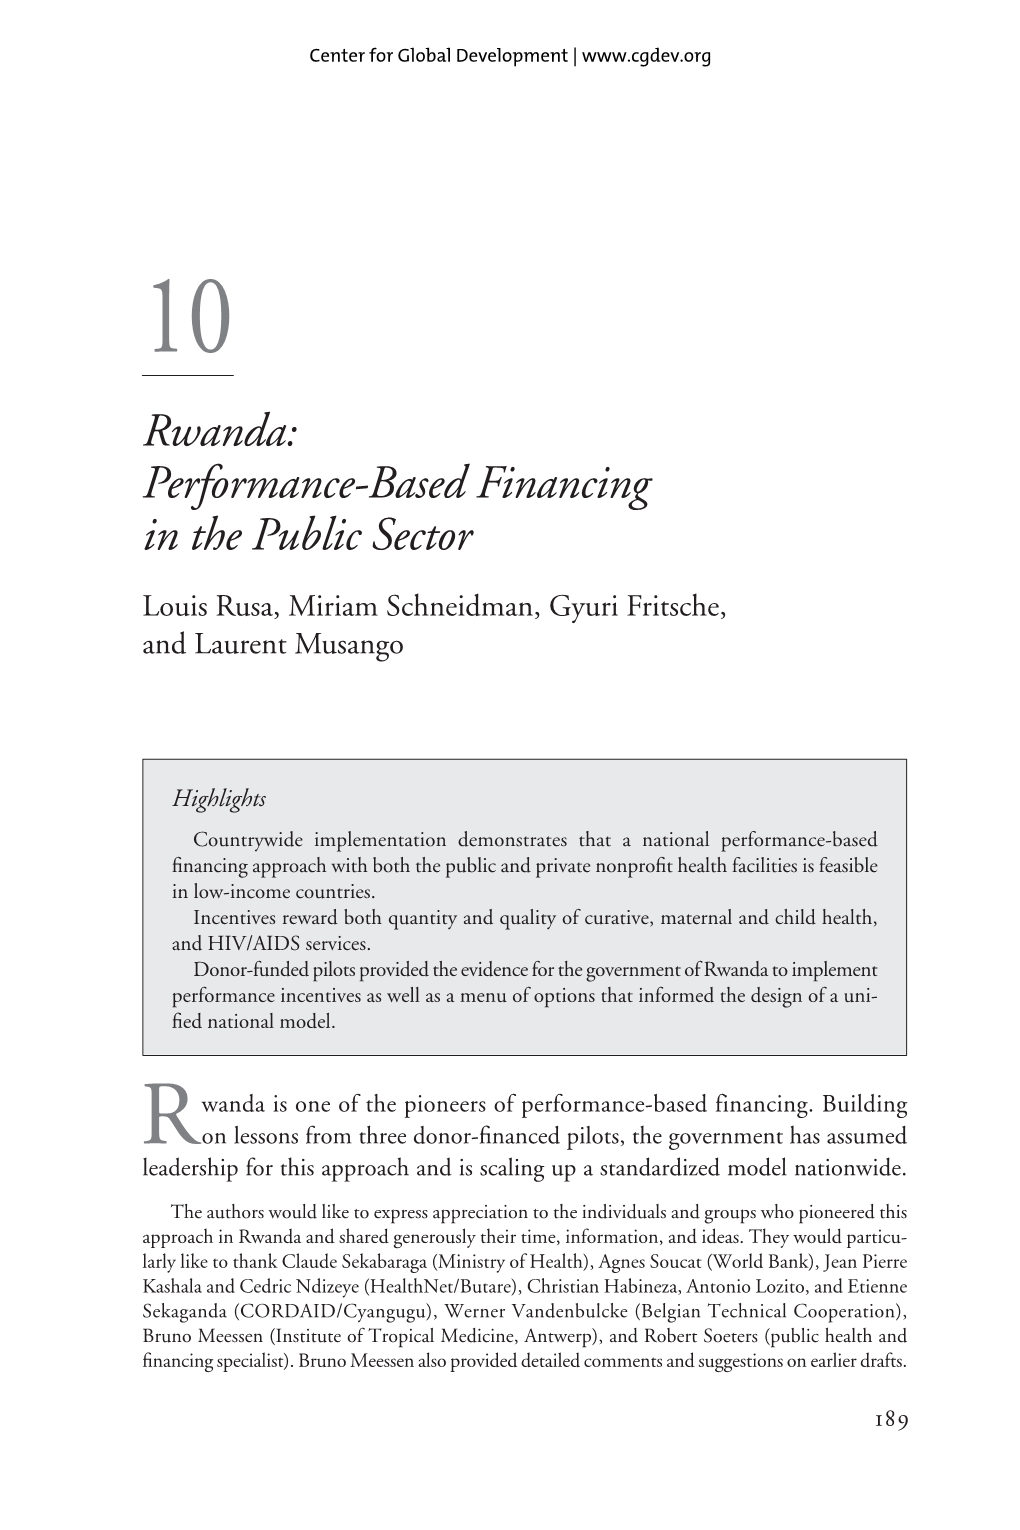 Rwanda: Performance-Based Financing in the Public Sector